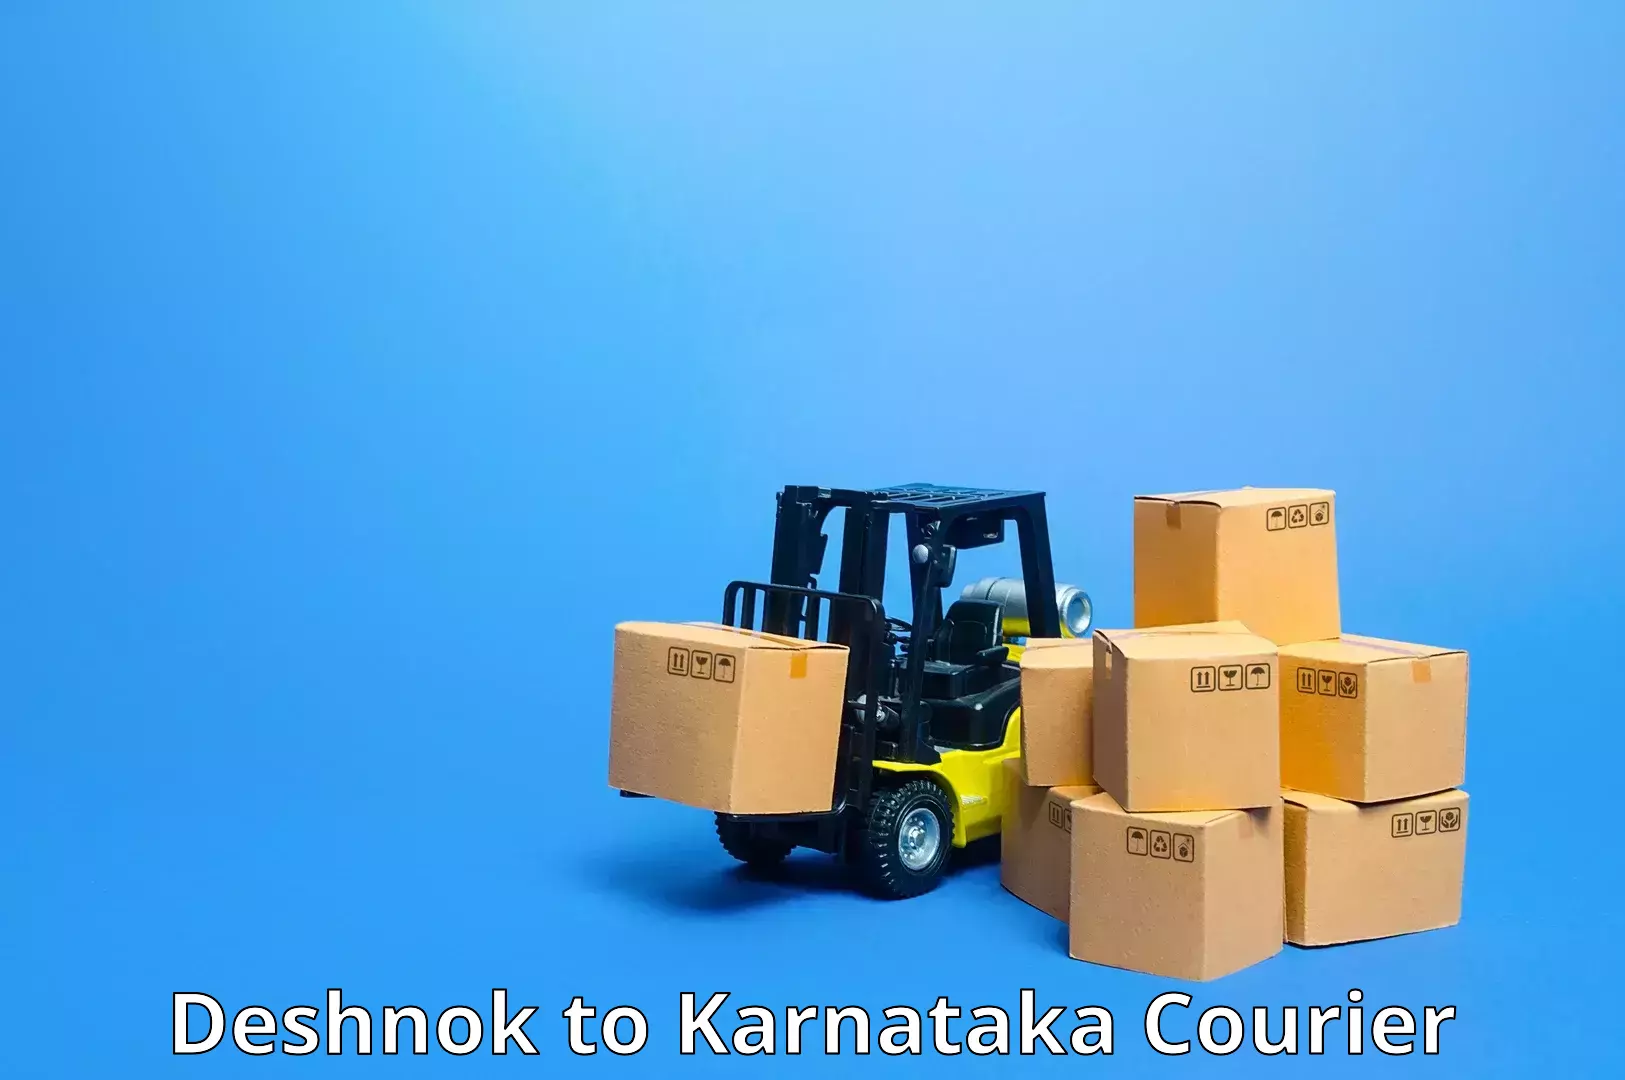 Tech-enabled shipping Deshnok to Shorapur